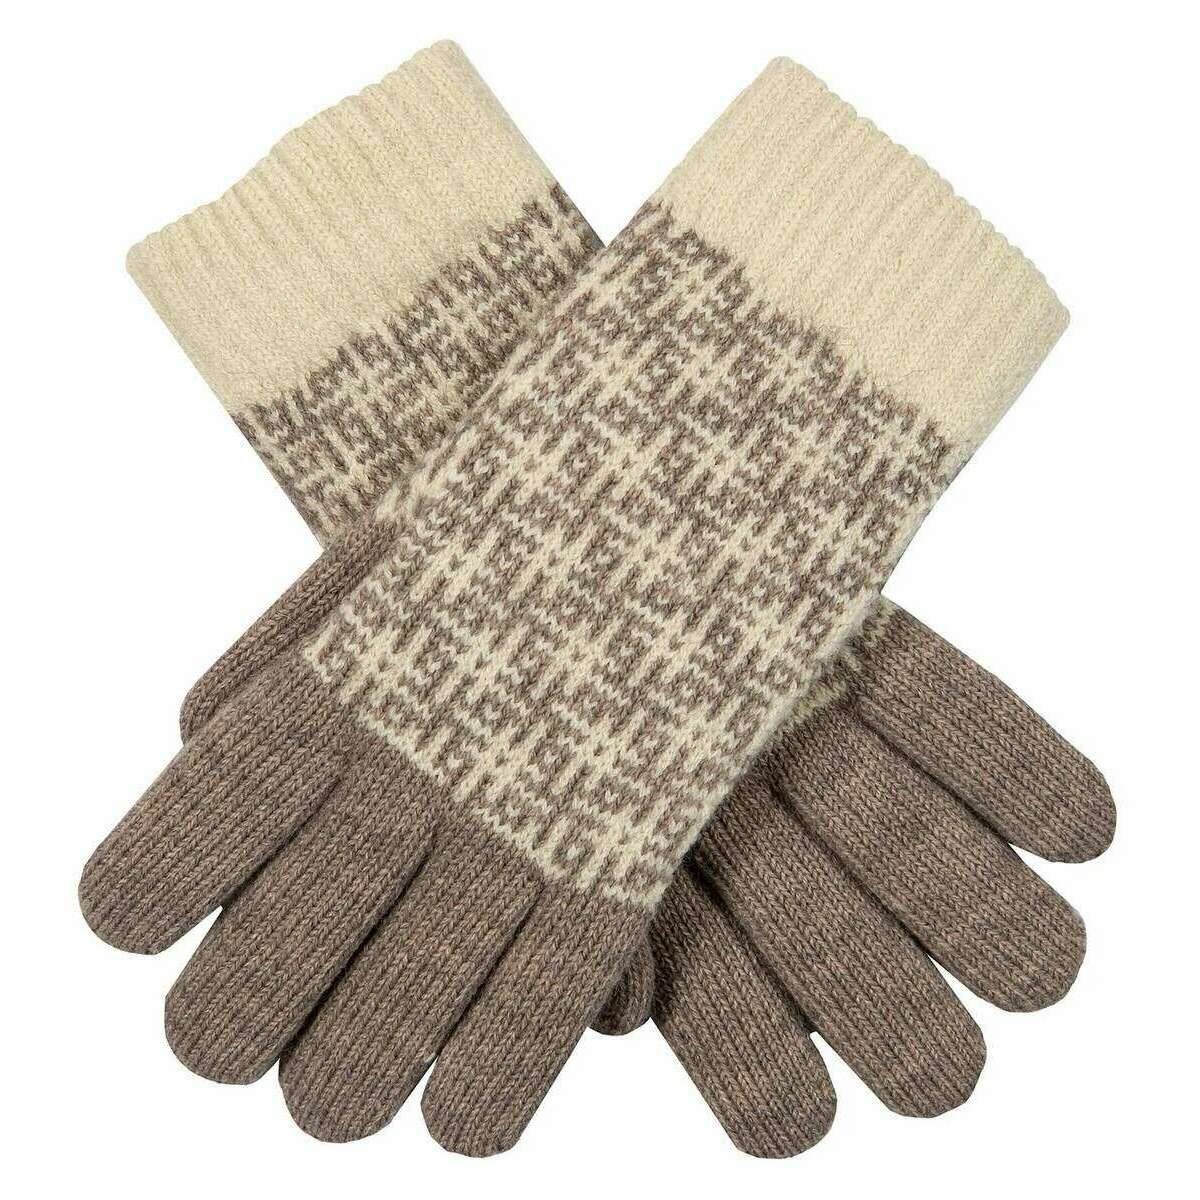 Dents Hashtag Jacquard Knitted Gloves - Camel Beige/Winter White